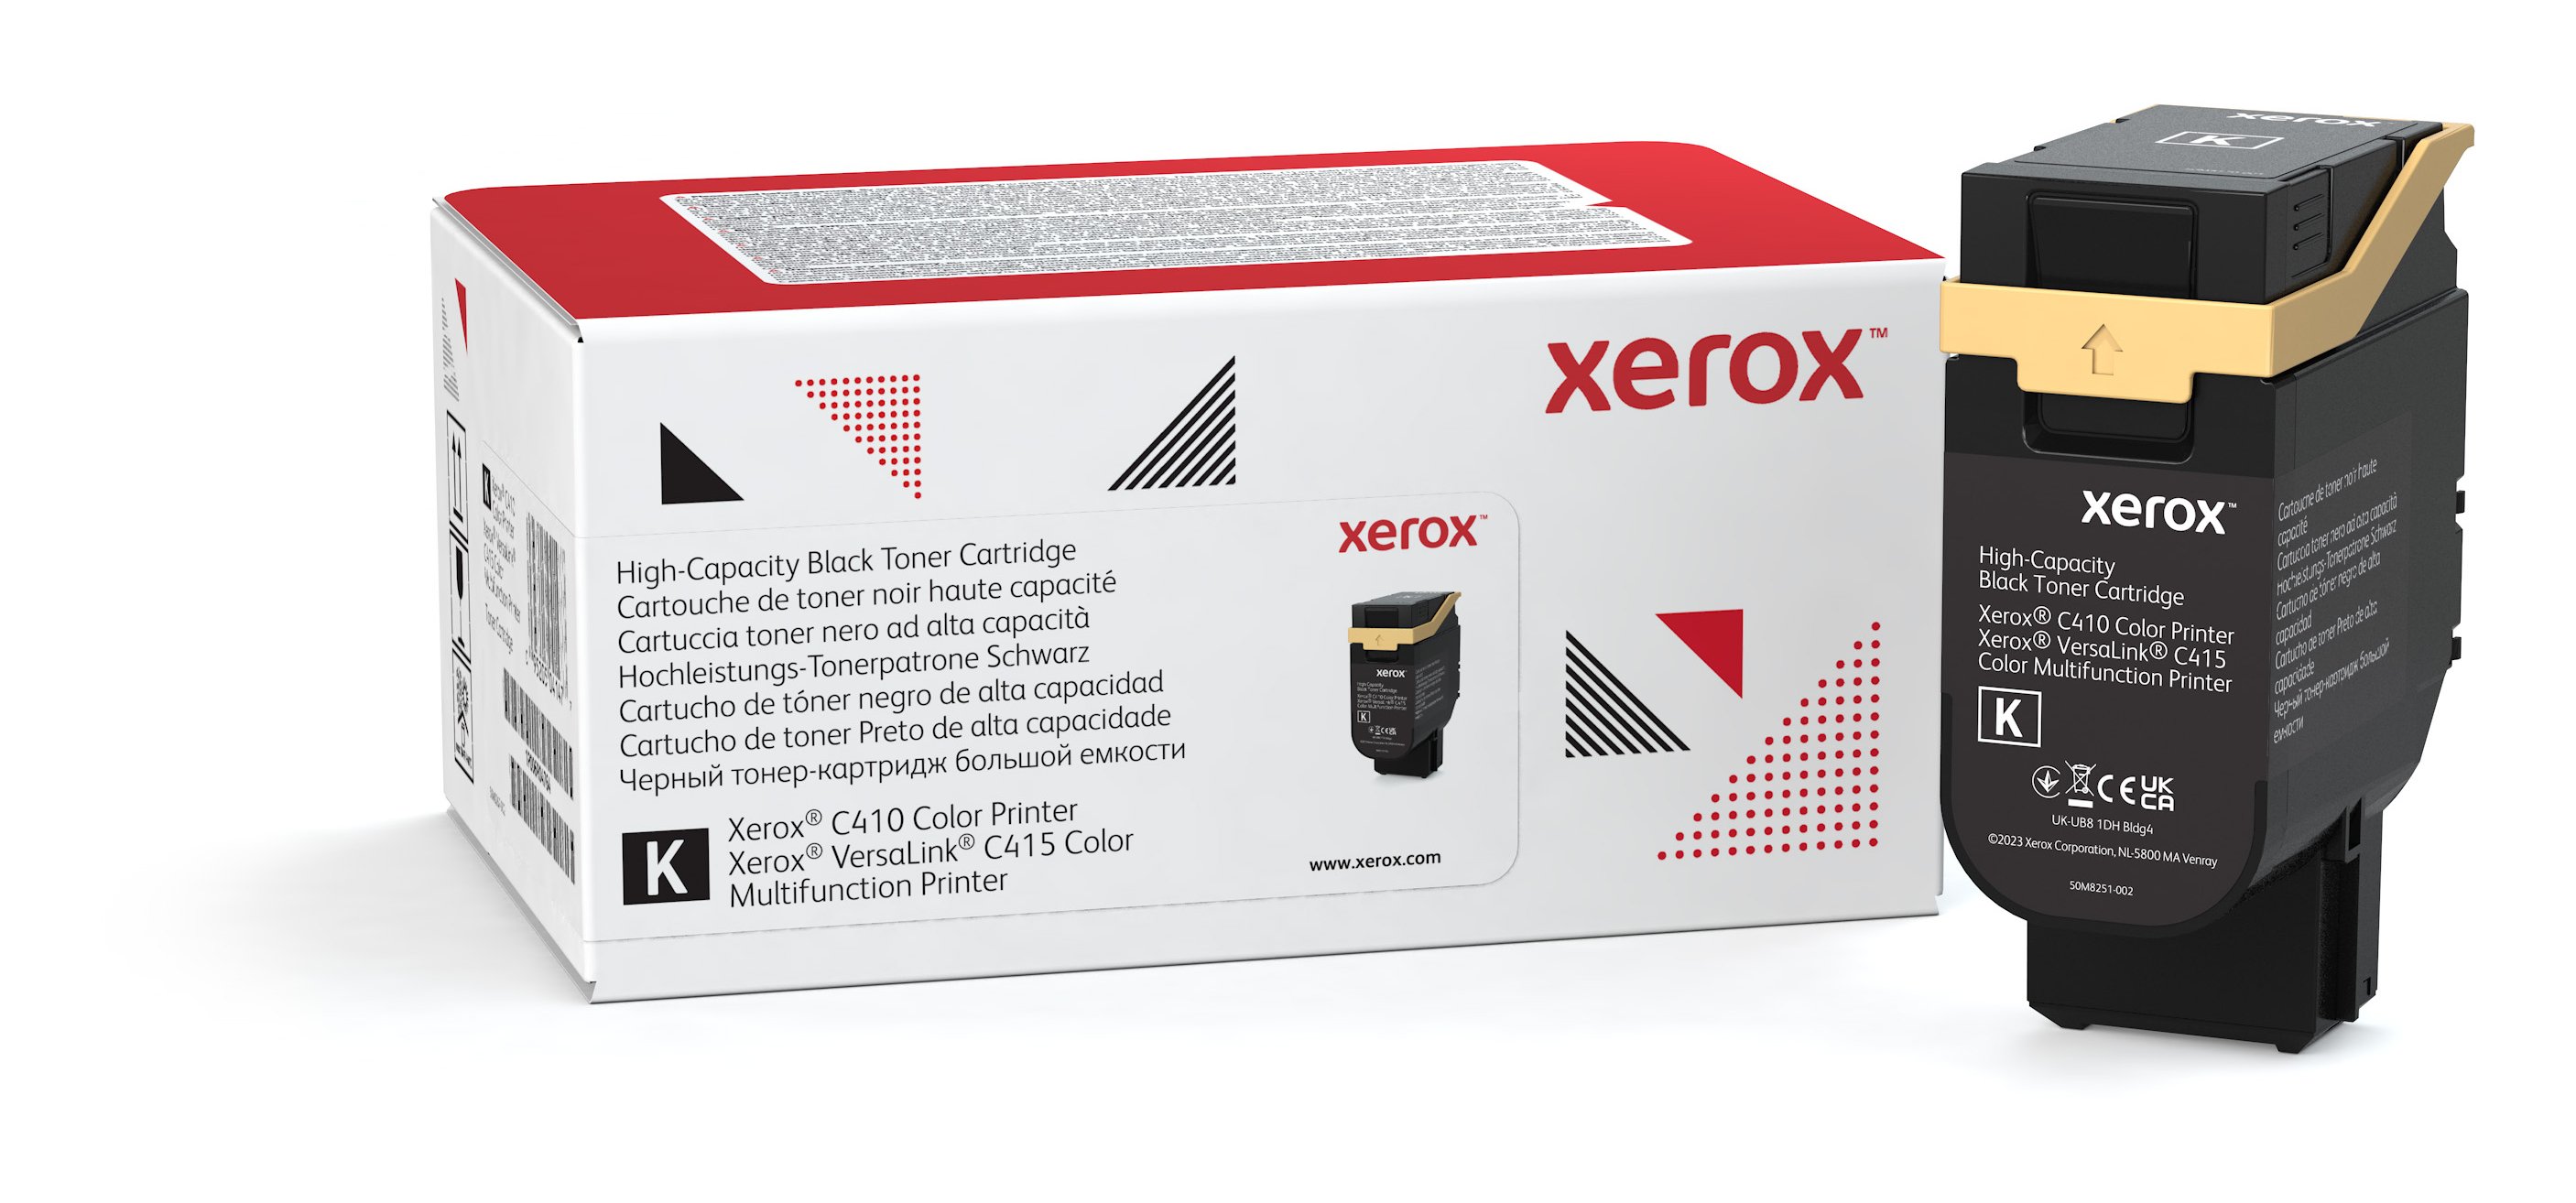 Xerox - High Capacity - Black - Original - Box - Toner Cartridge Use And Return - For Xerox C410, VersaLink C415/DN, C415V_DN 006R04685 - C2000